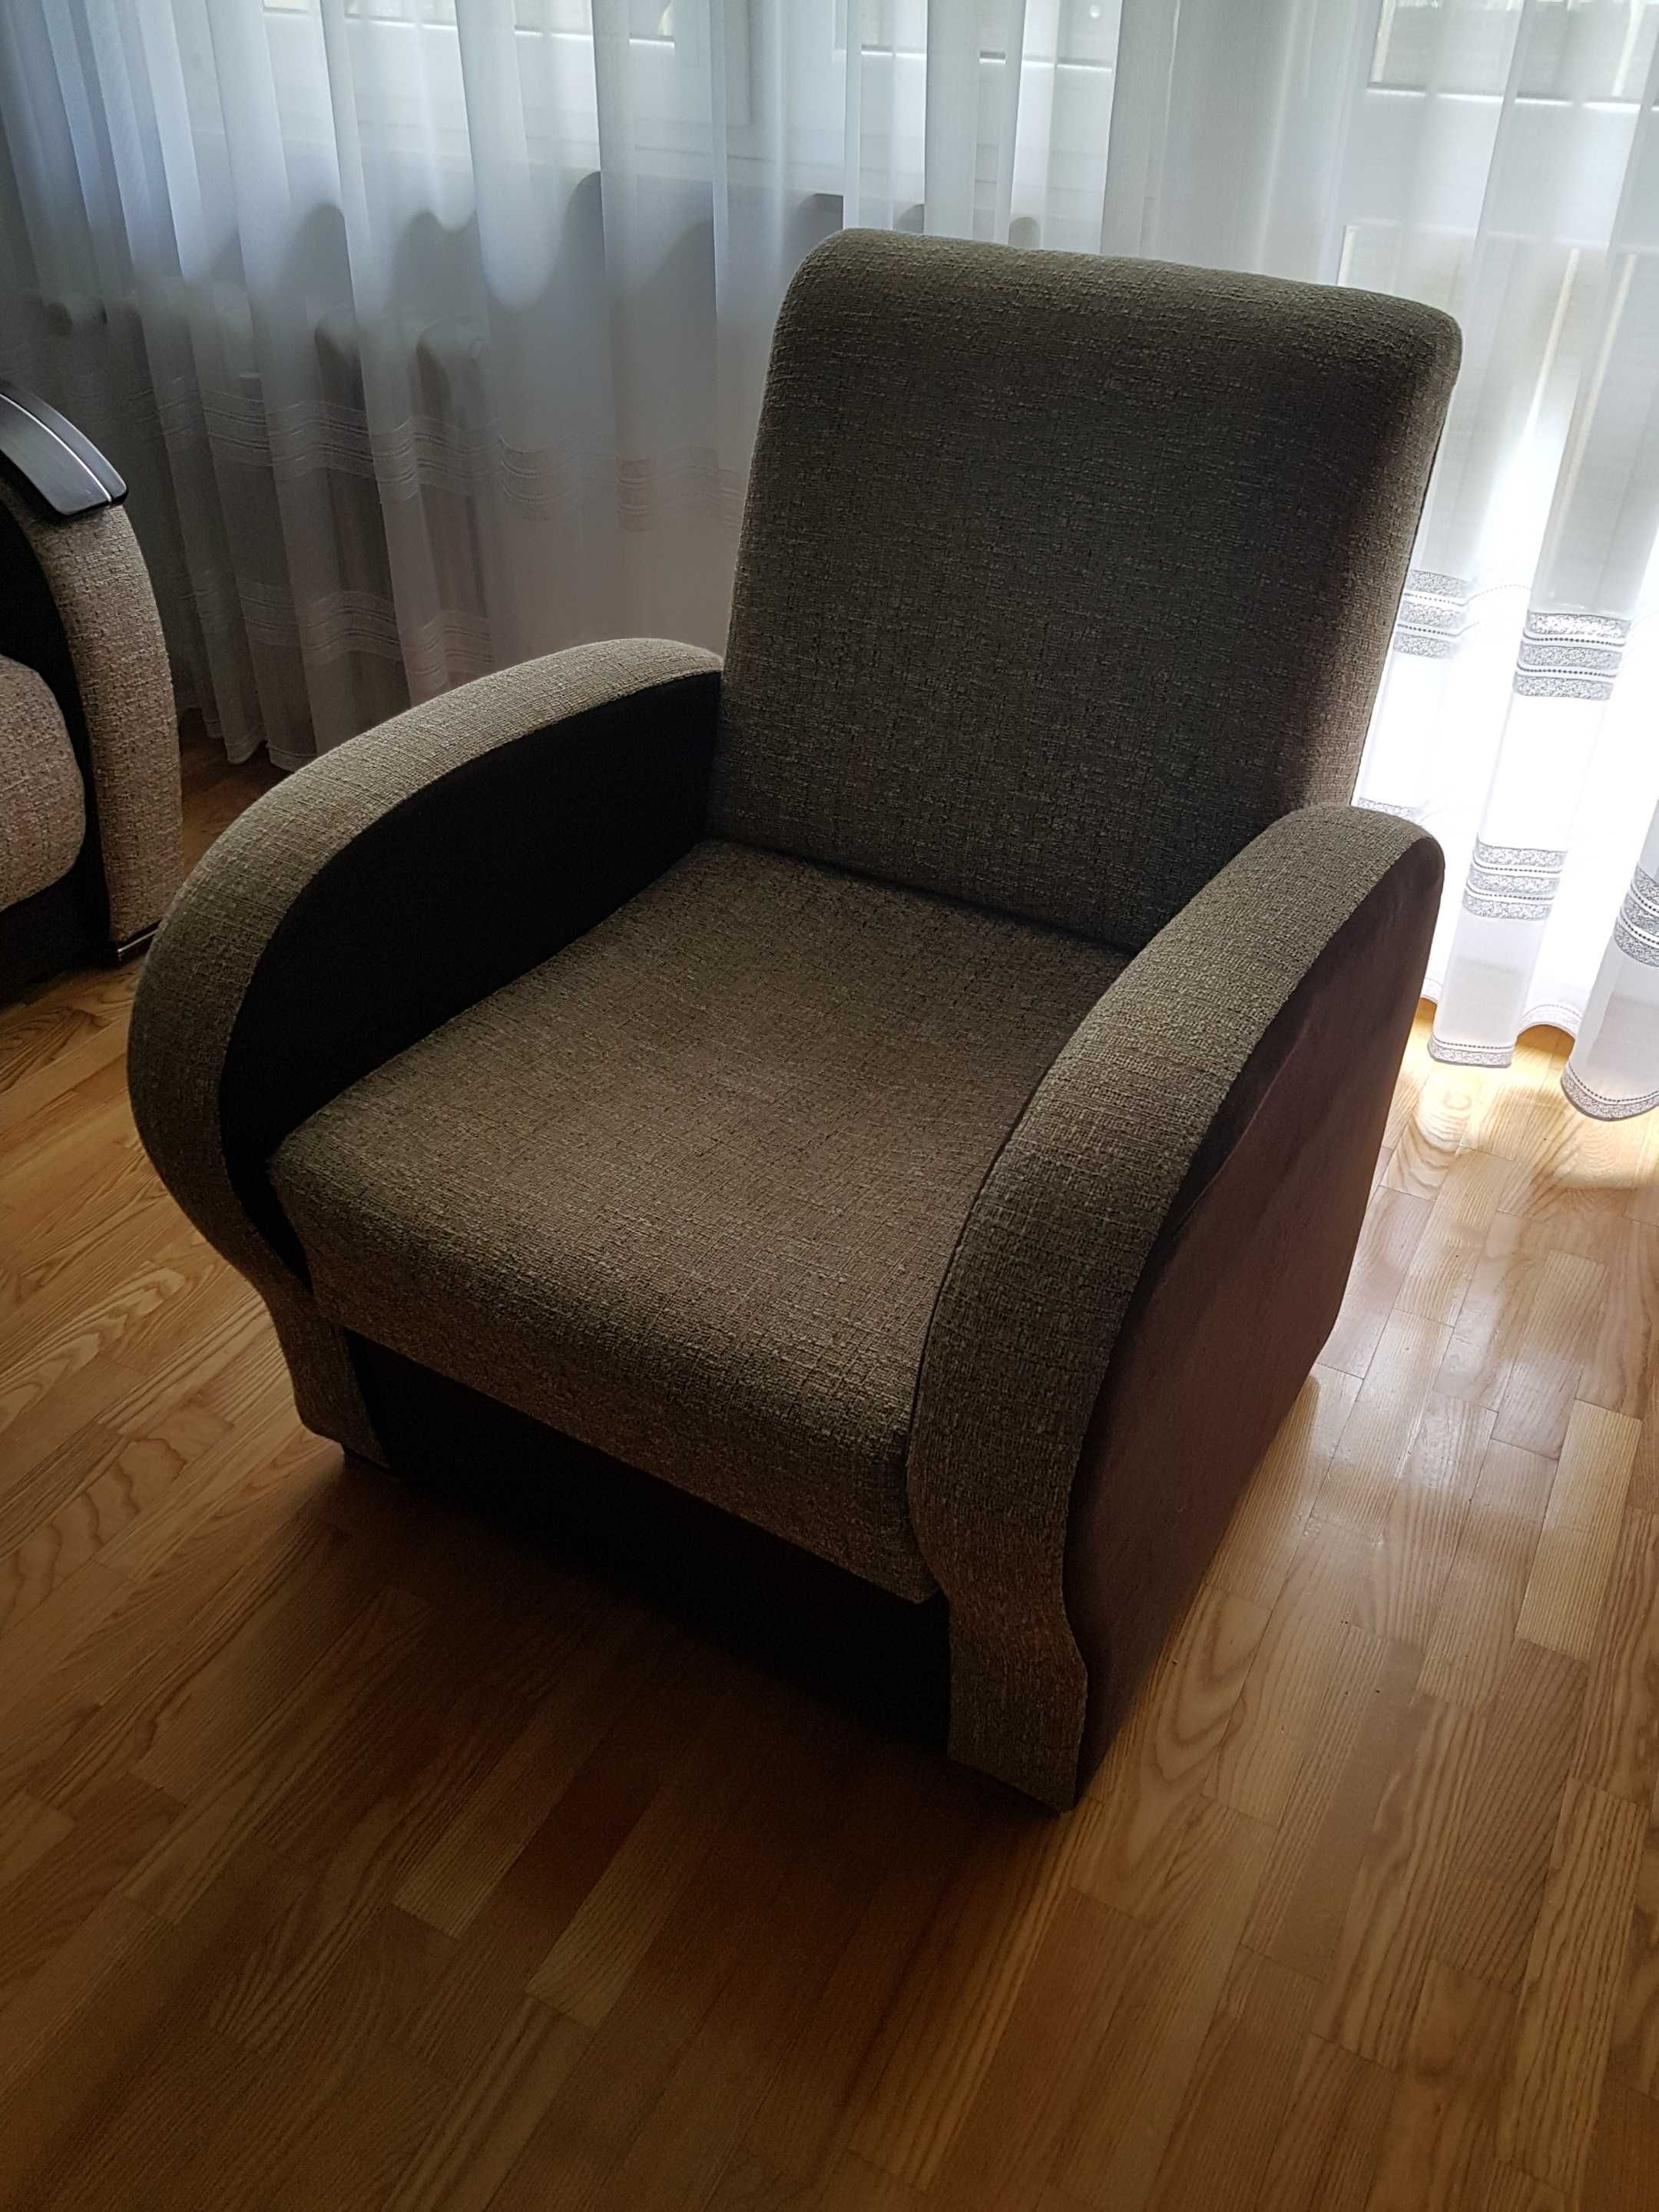 Wersalka + fotel